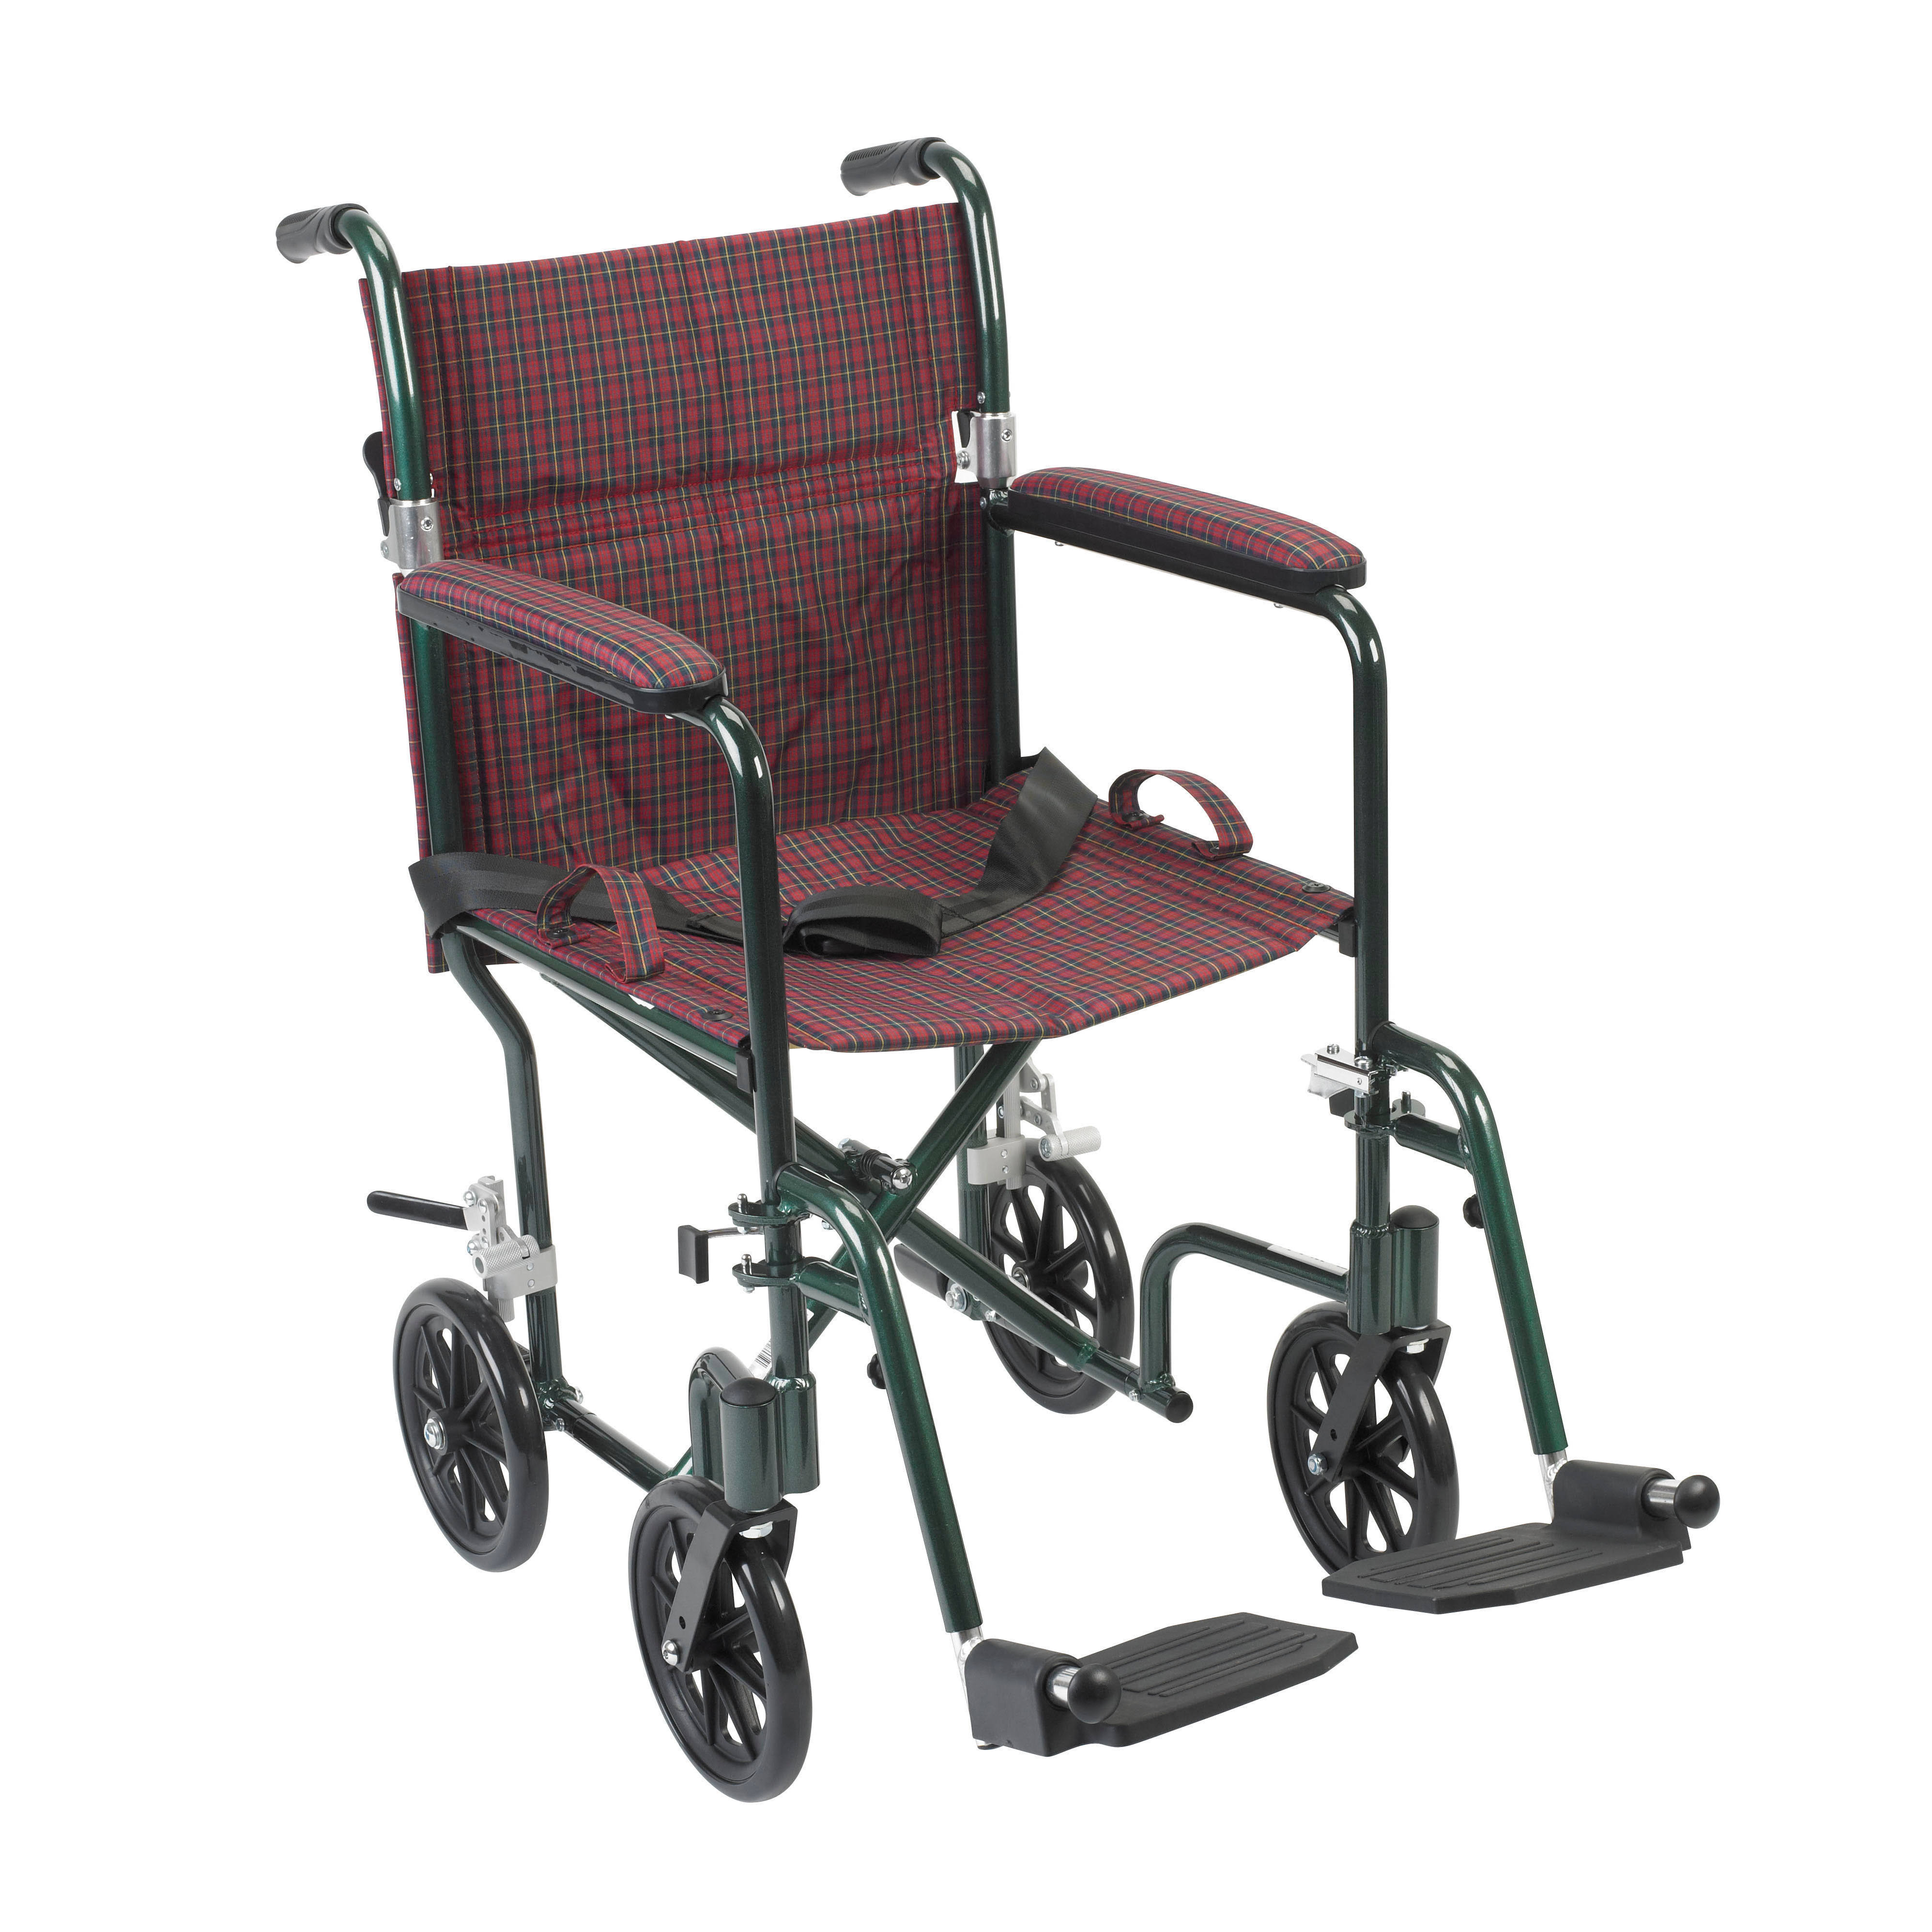 Drive Medical FW19BG - Flyweight Lightweight Folding Transport Wheelchair, 19, Green Frame, Burgundy Upholstery